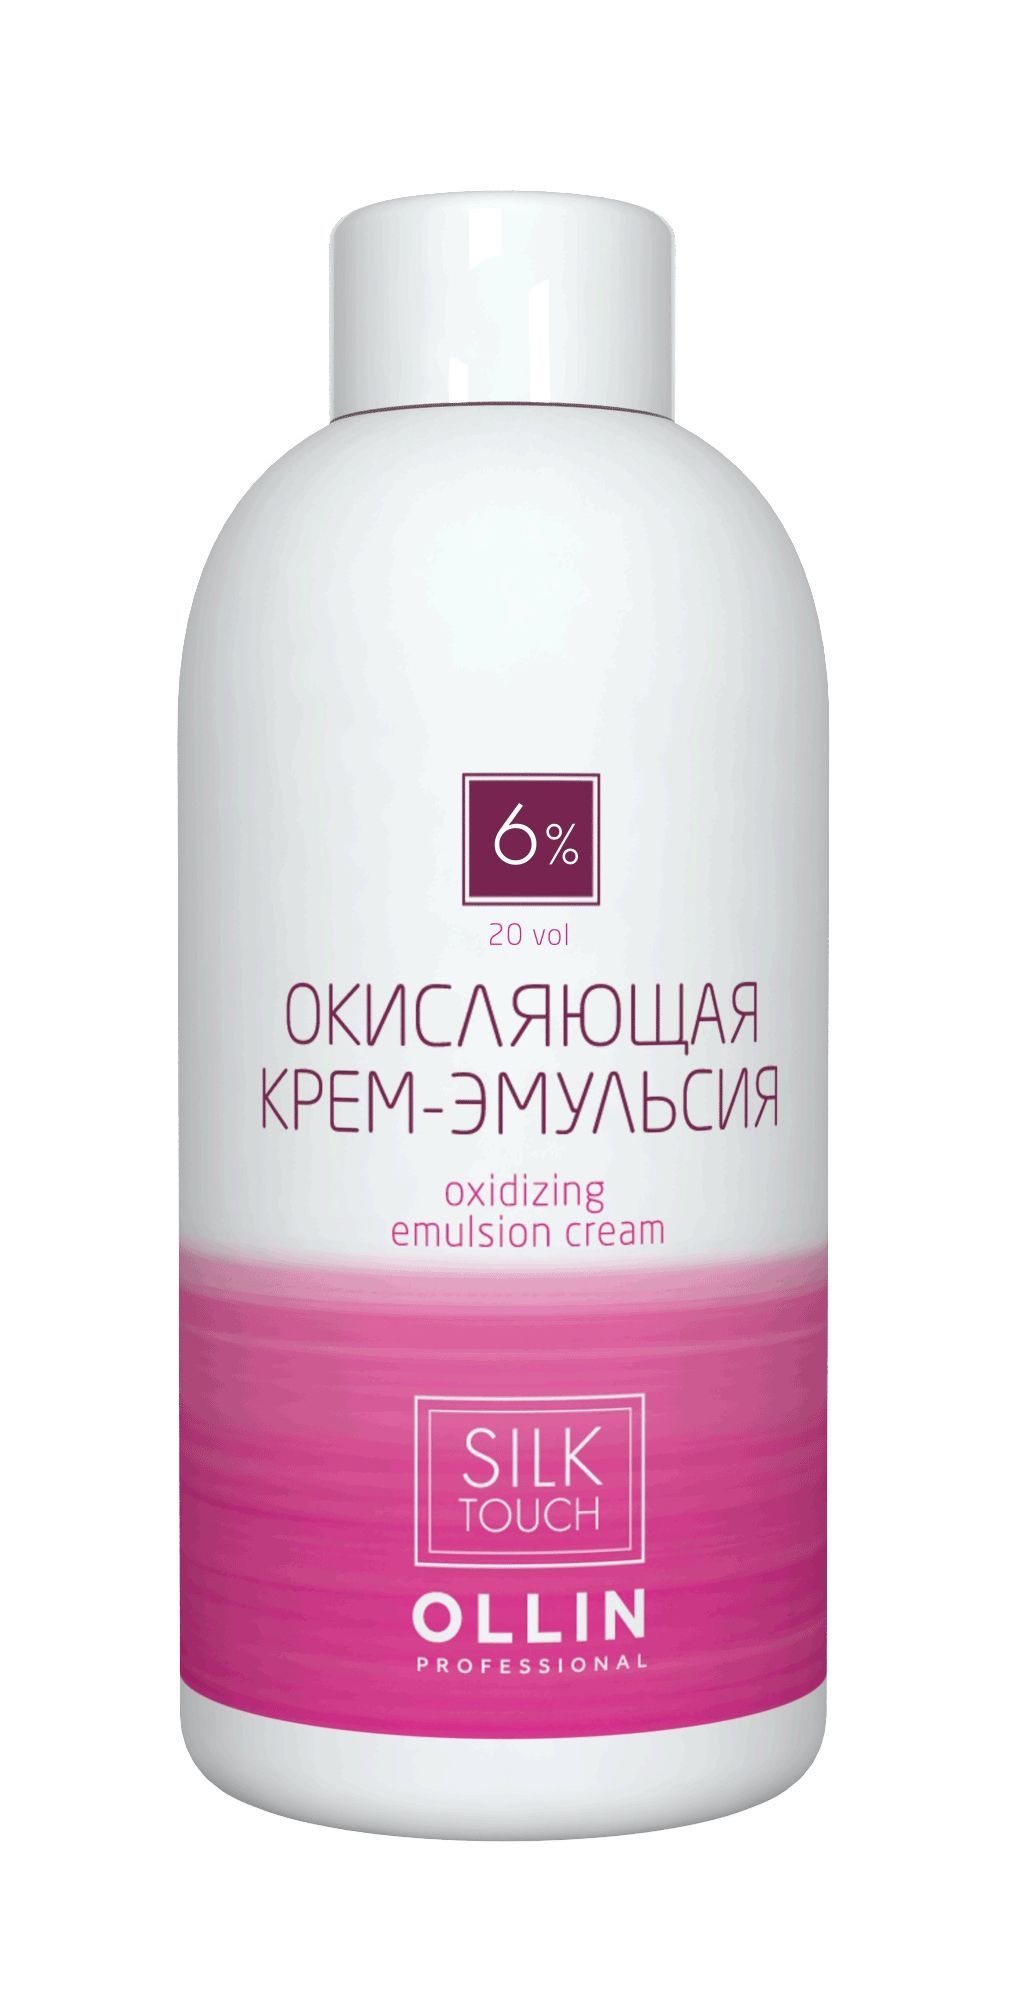 Ollin, Окисляющая крем-эмульсия 6% 20vol серии «Silk Touch», Фото интернет-магазин Премиум-Косметика.РФ